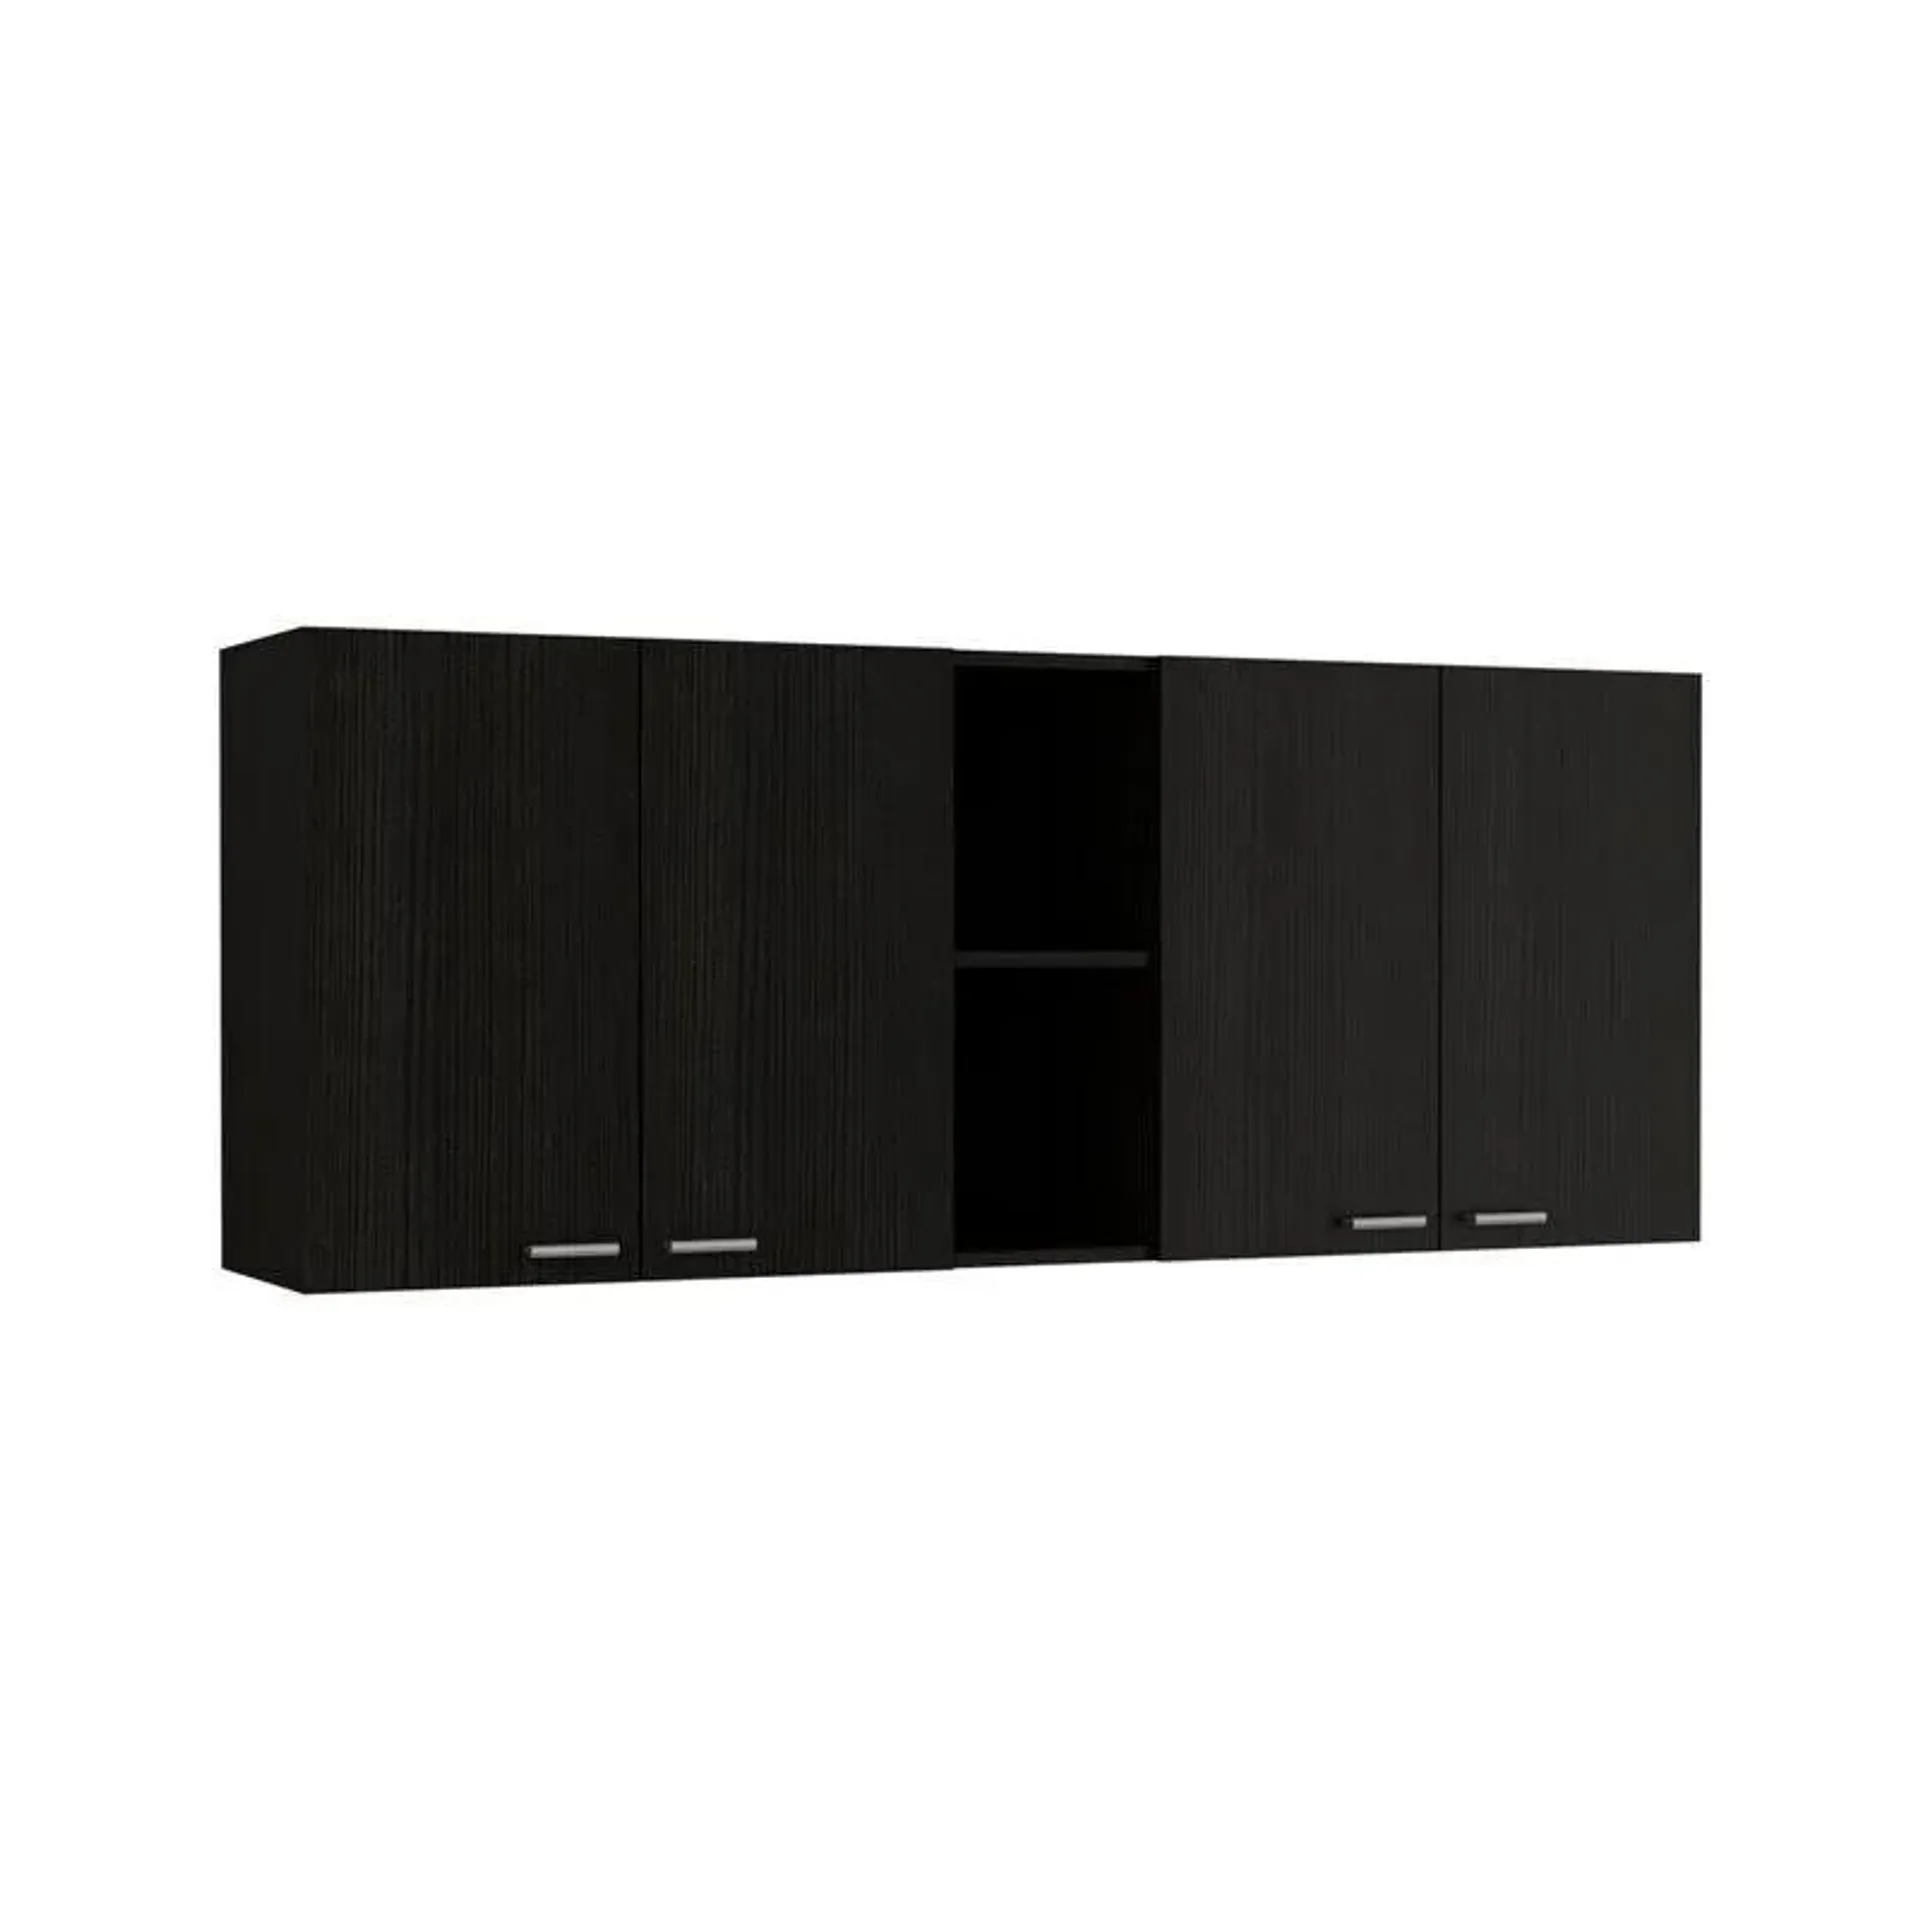 Portofino 150 Wall Cabinet, Double Door, Two External Shelves, Two Interior Shelves -Black